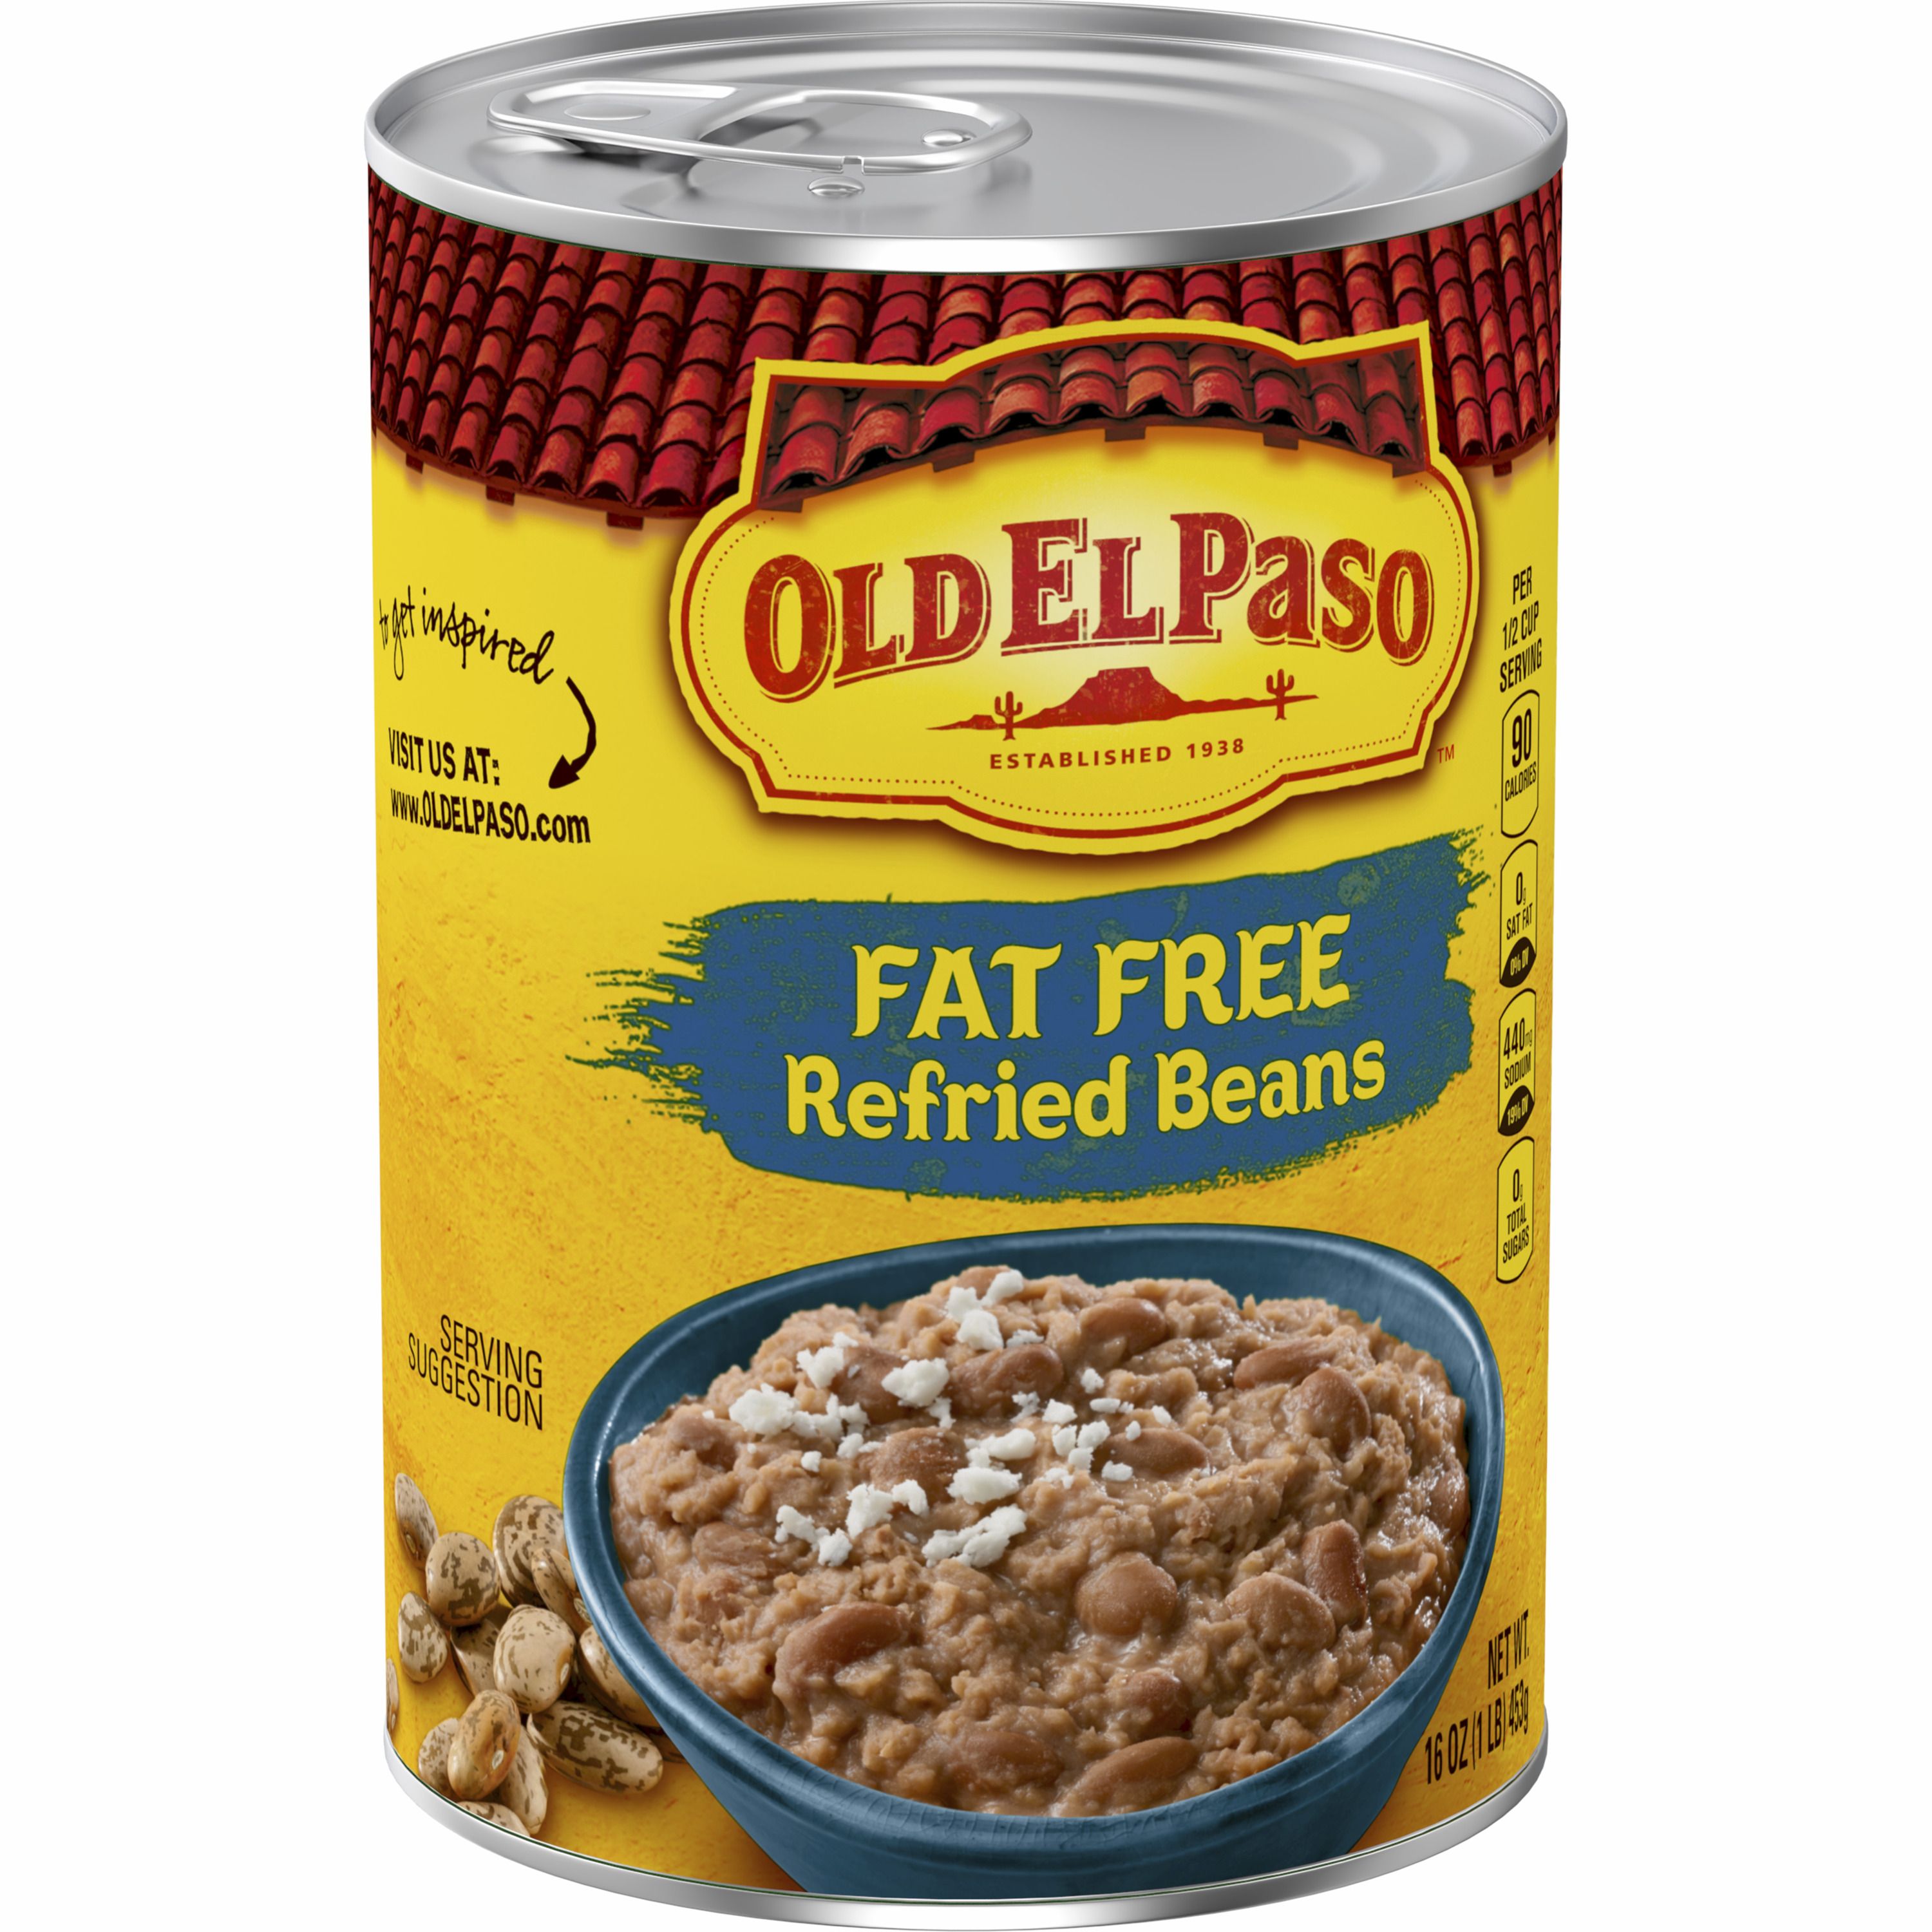 Old El Paso Fat Free Refried Beans, 16 oz